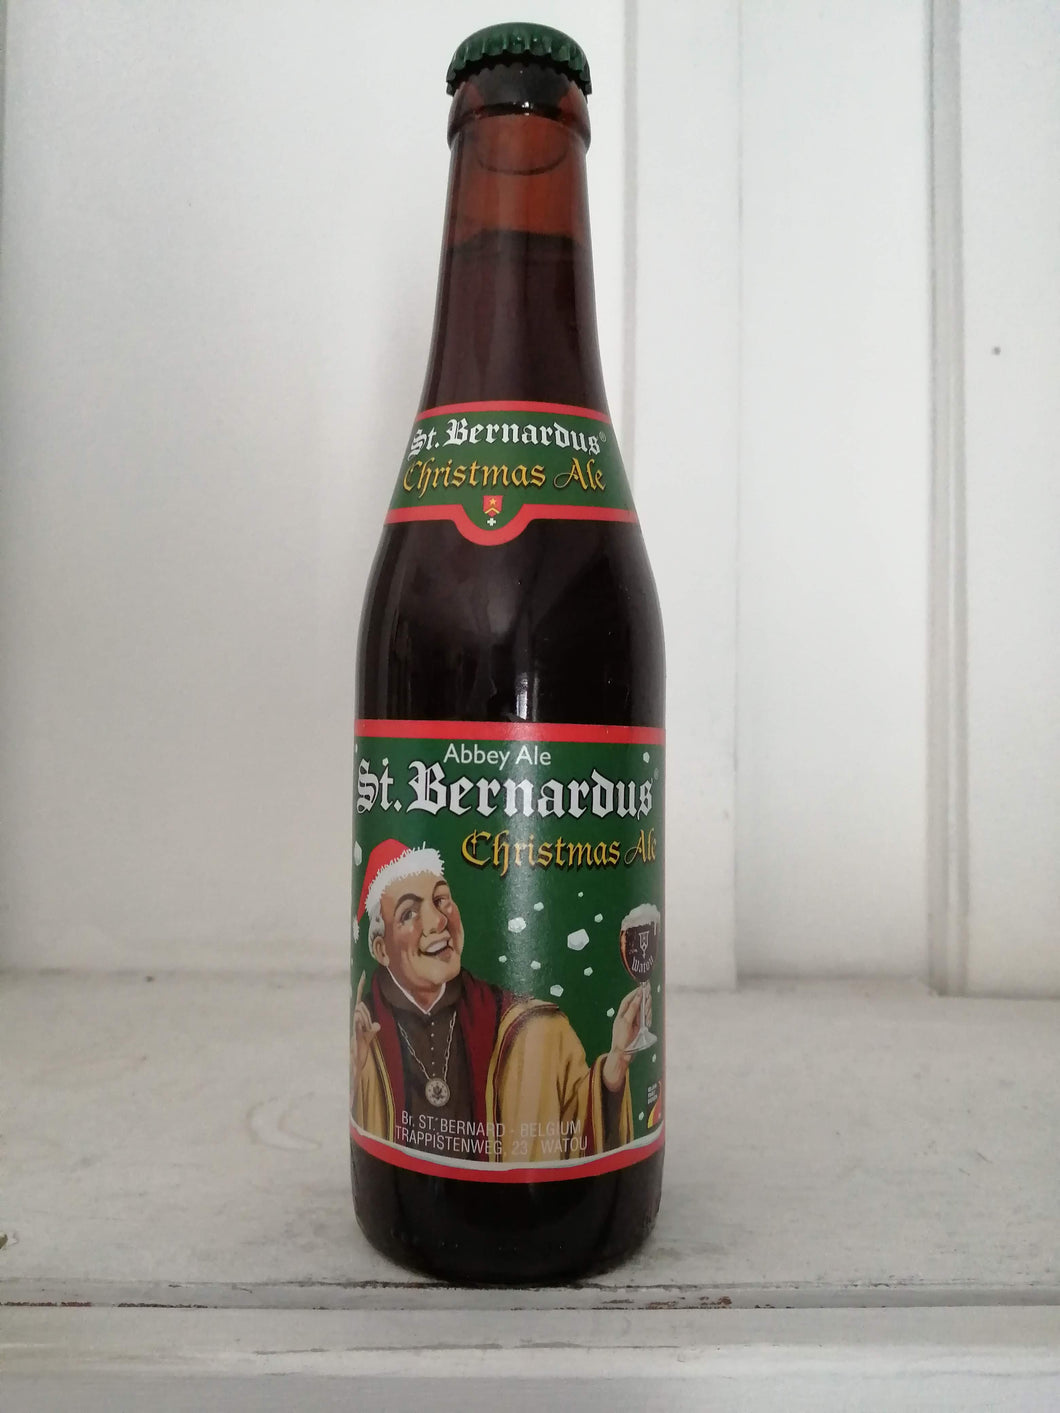 St Bernadus Christmas Ale 10% (330ml bottle)